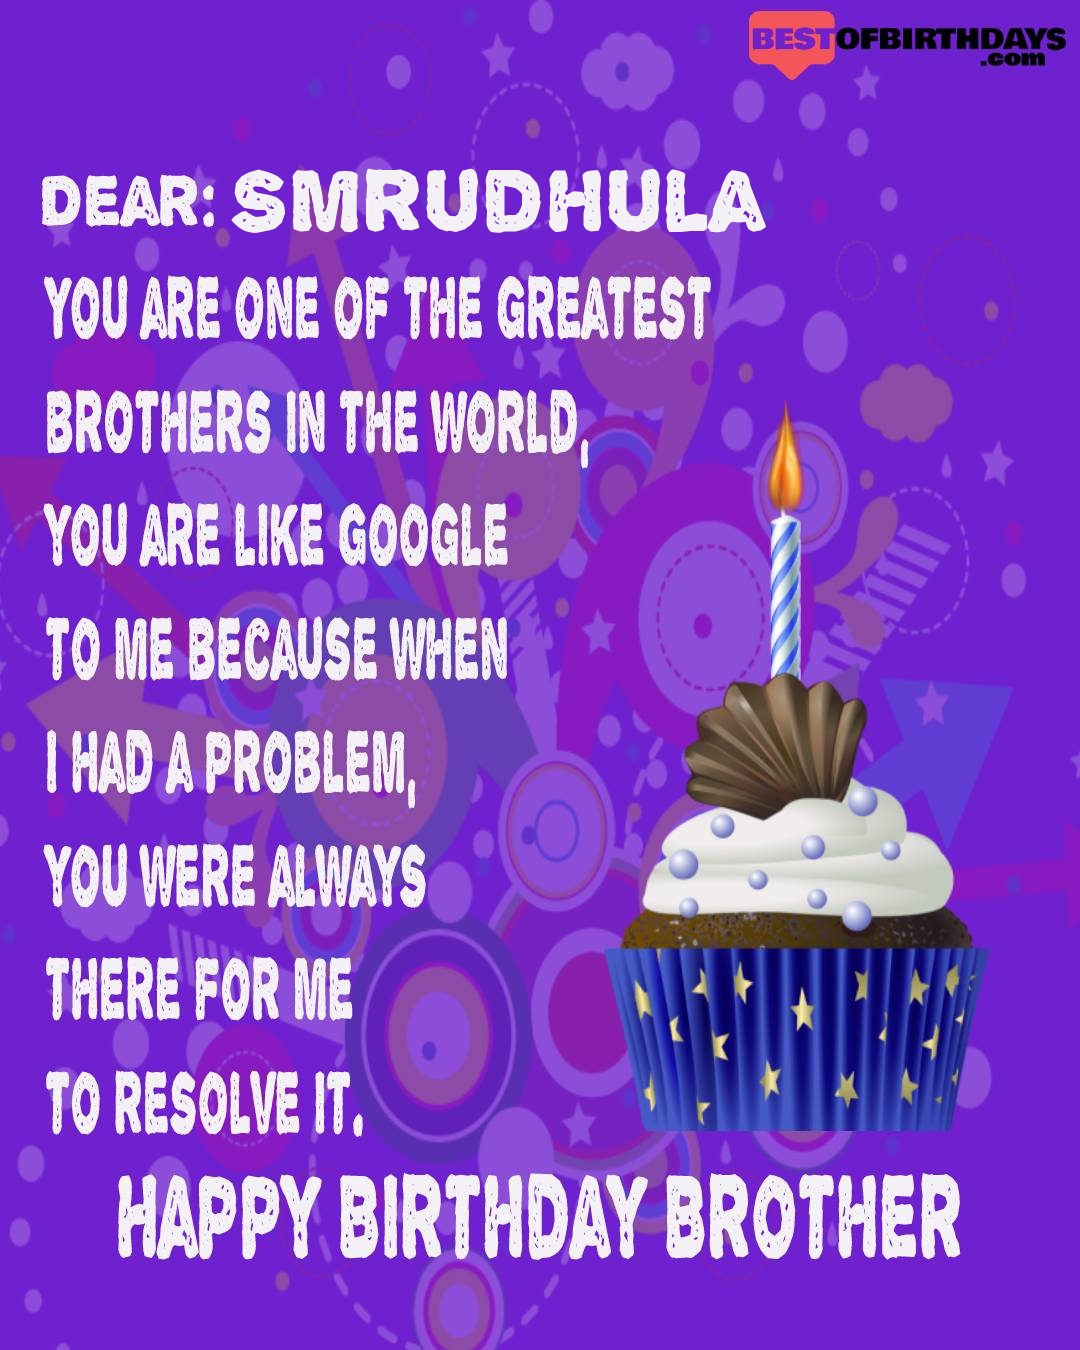 Happy birthday smrudhula bhai brother bro